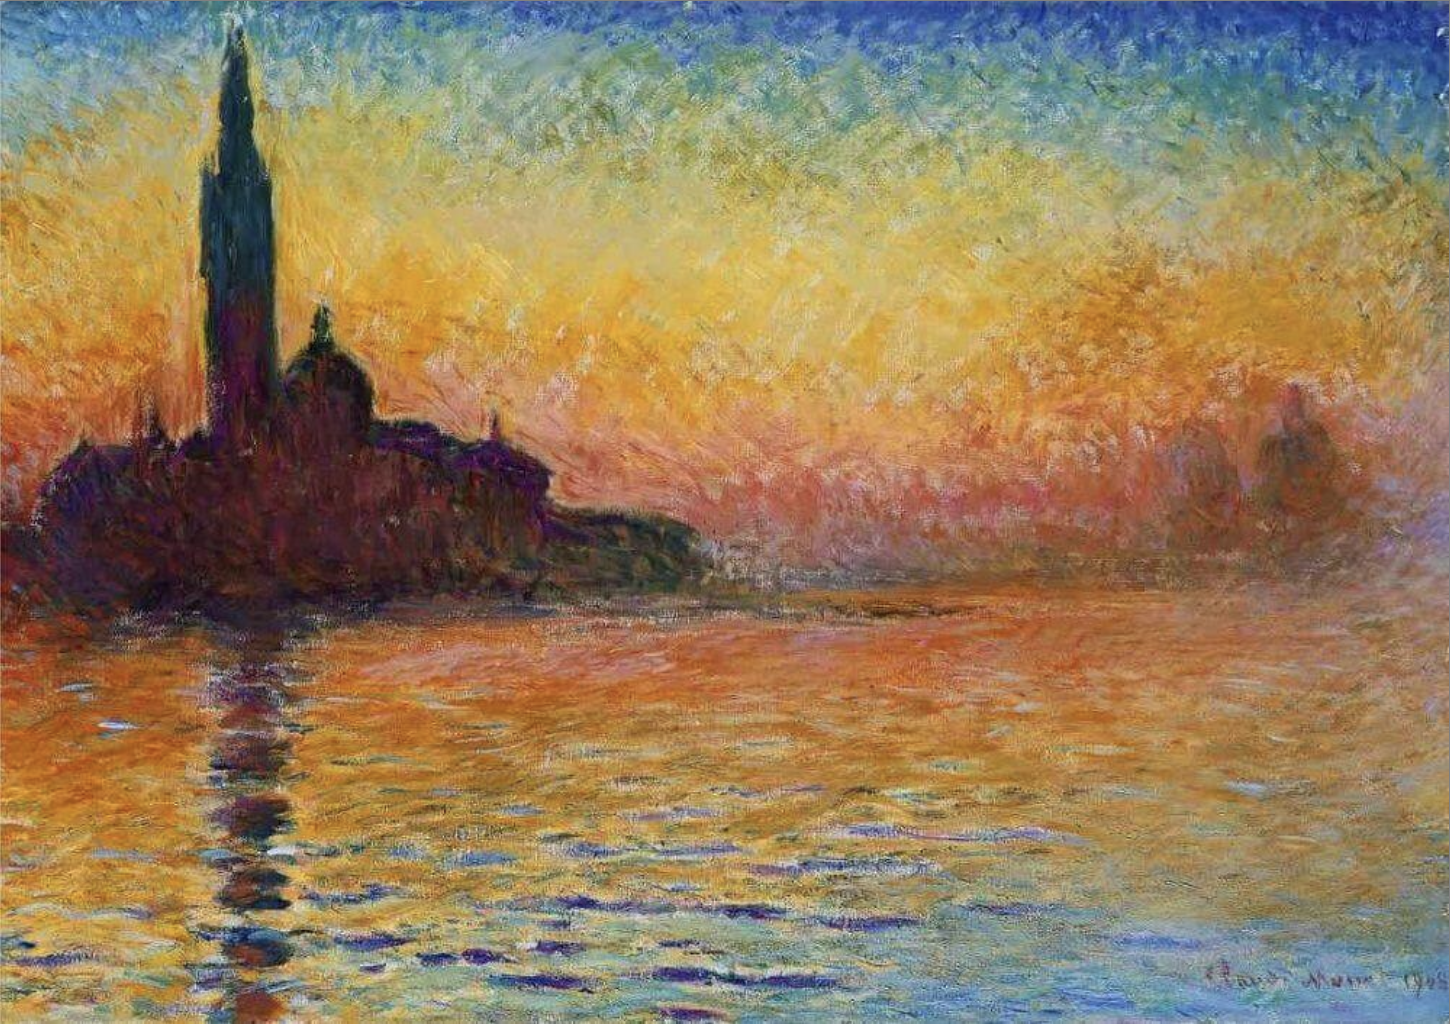 San Giorgio Maggiore at Dusk, 1908 by Claude Monet